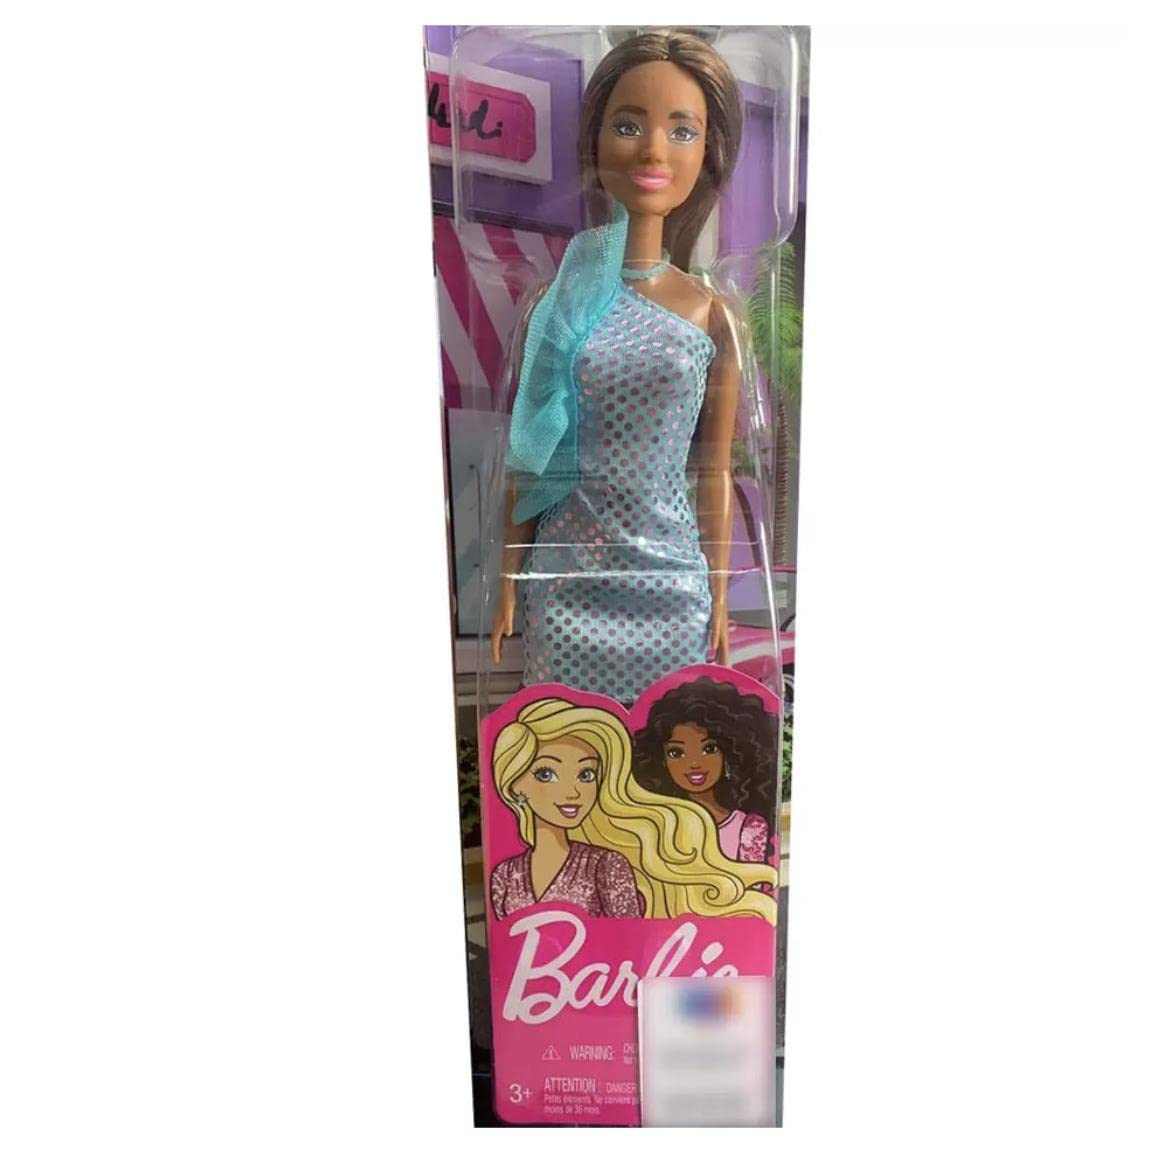 Barbie Brunette Hair Doll Wearing Teal Metallic Dress for Kids Ages 3+